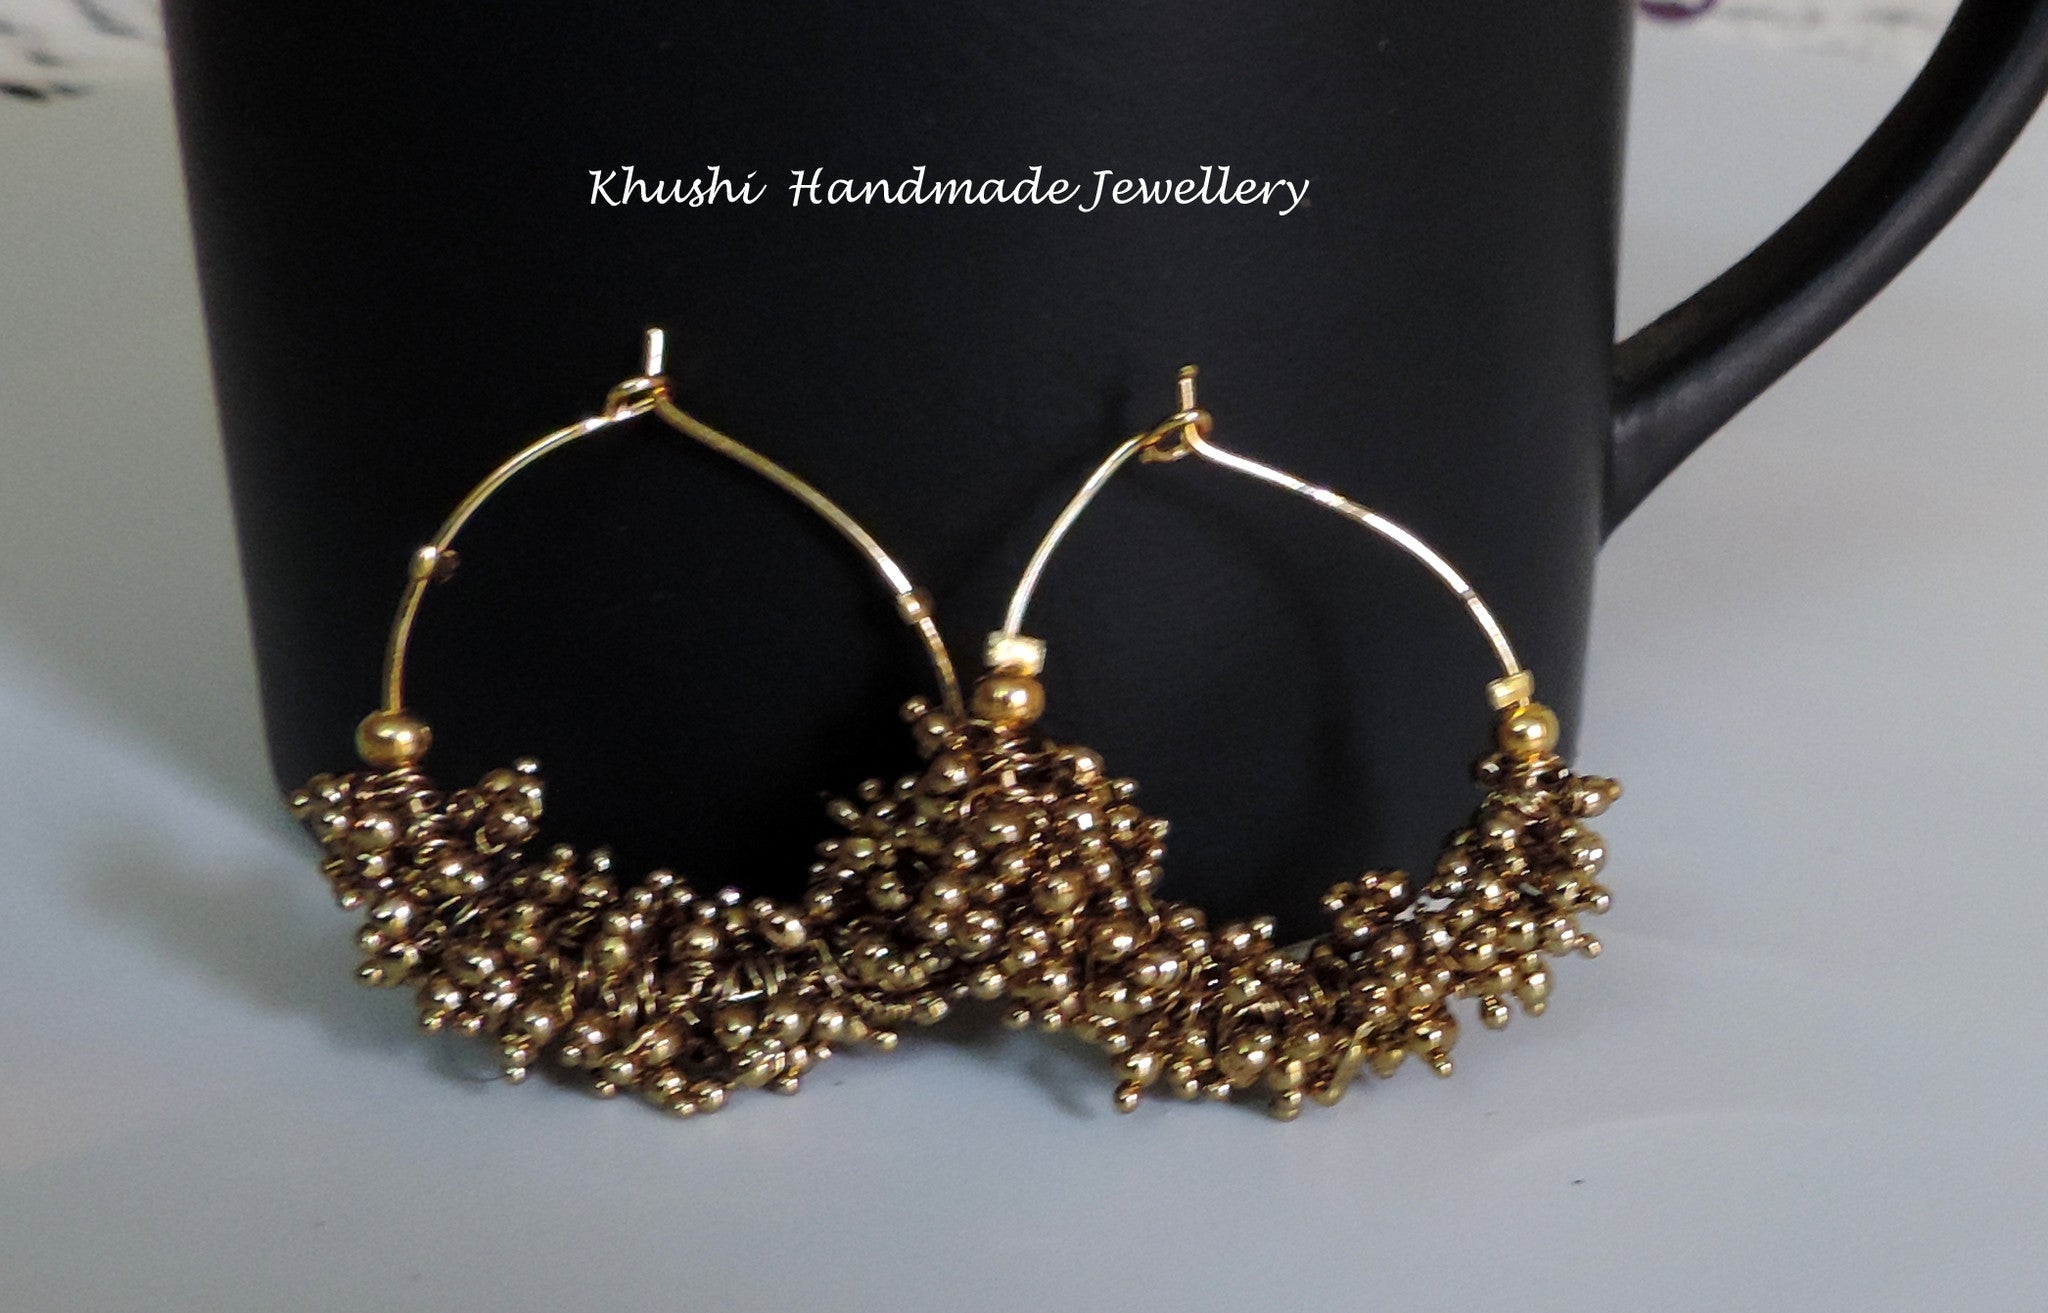 Handcrafted gold hoops - Khushi Handmade Jewellery